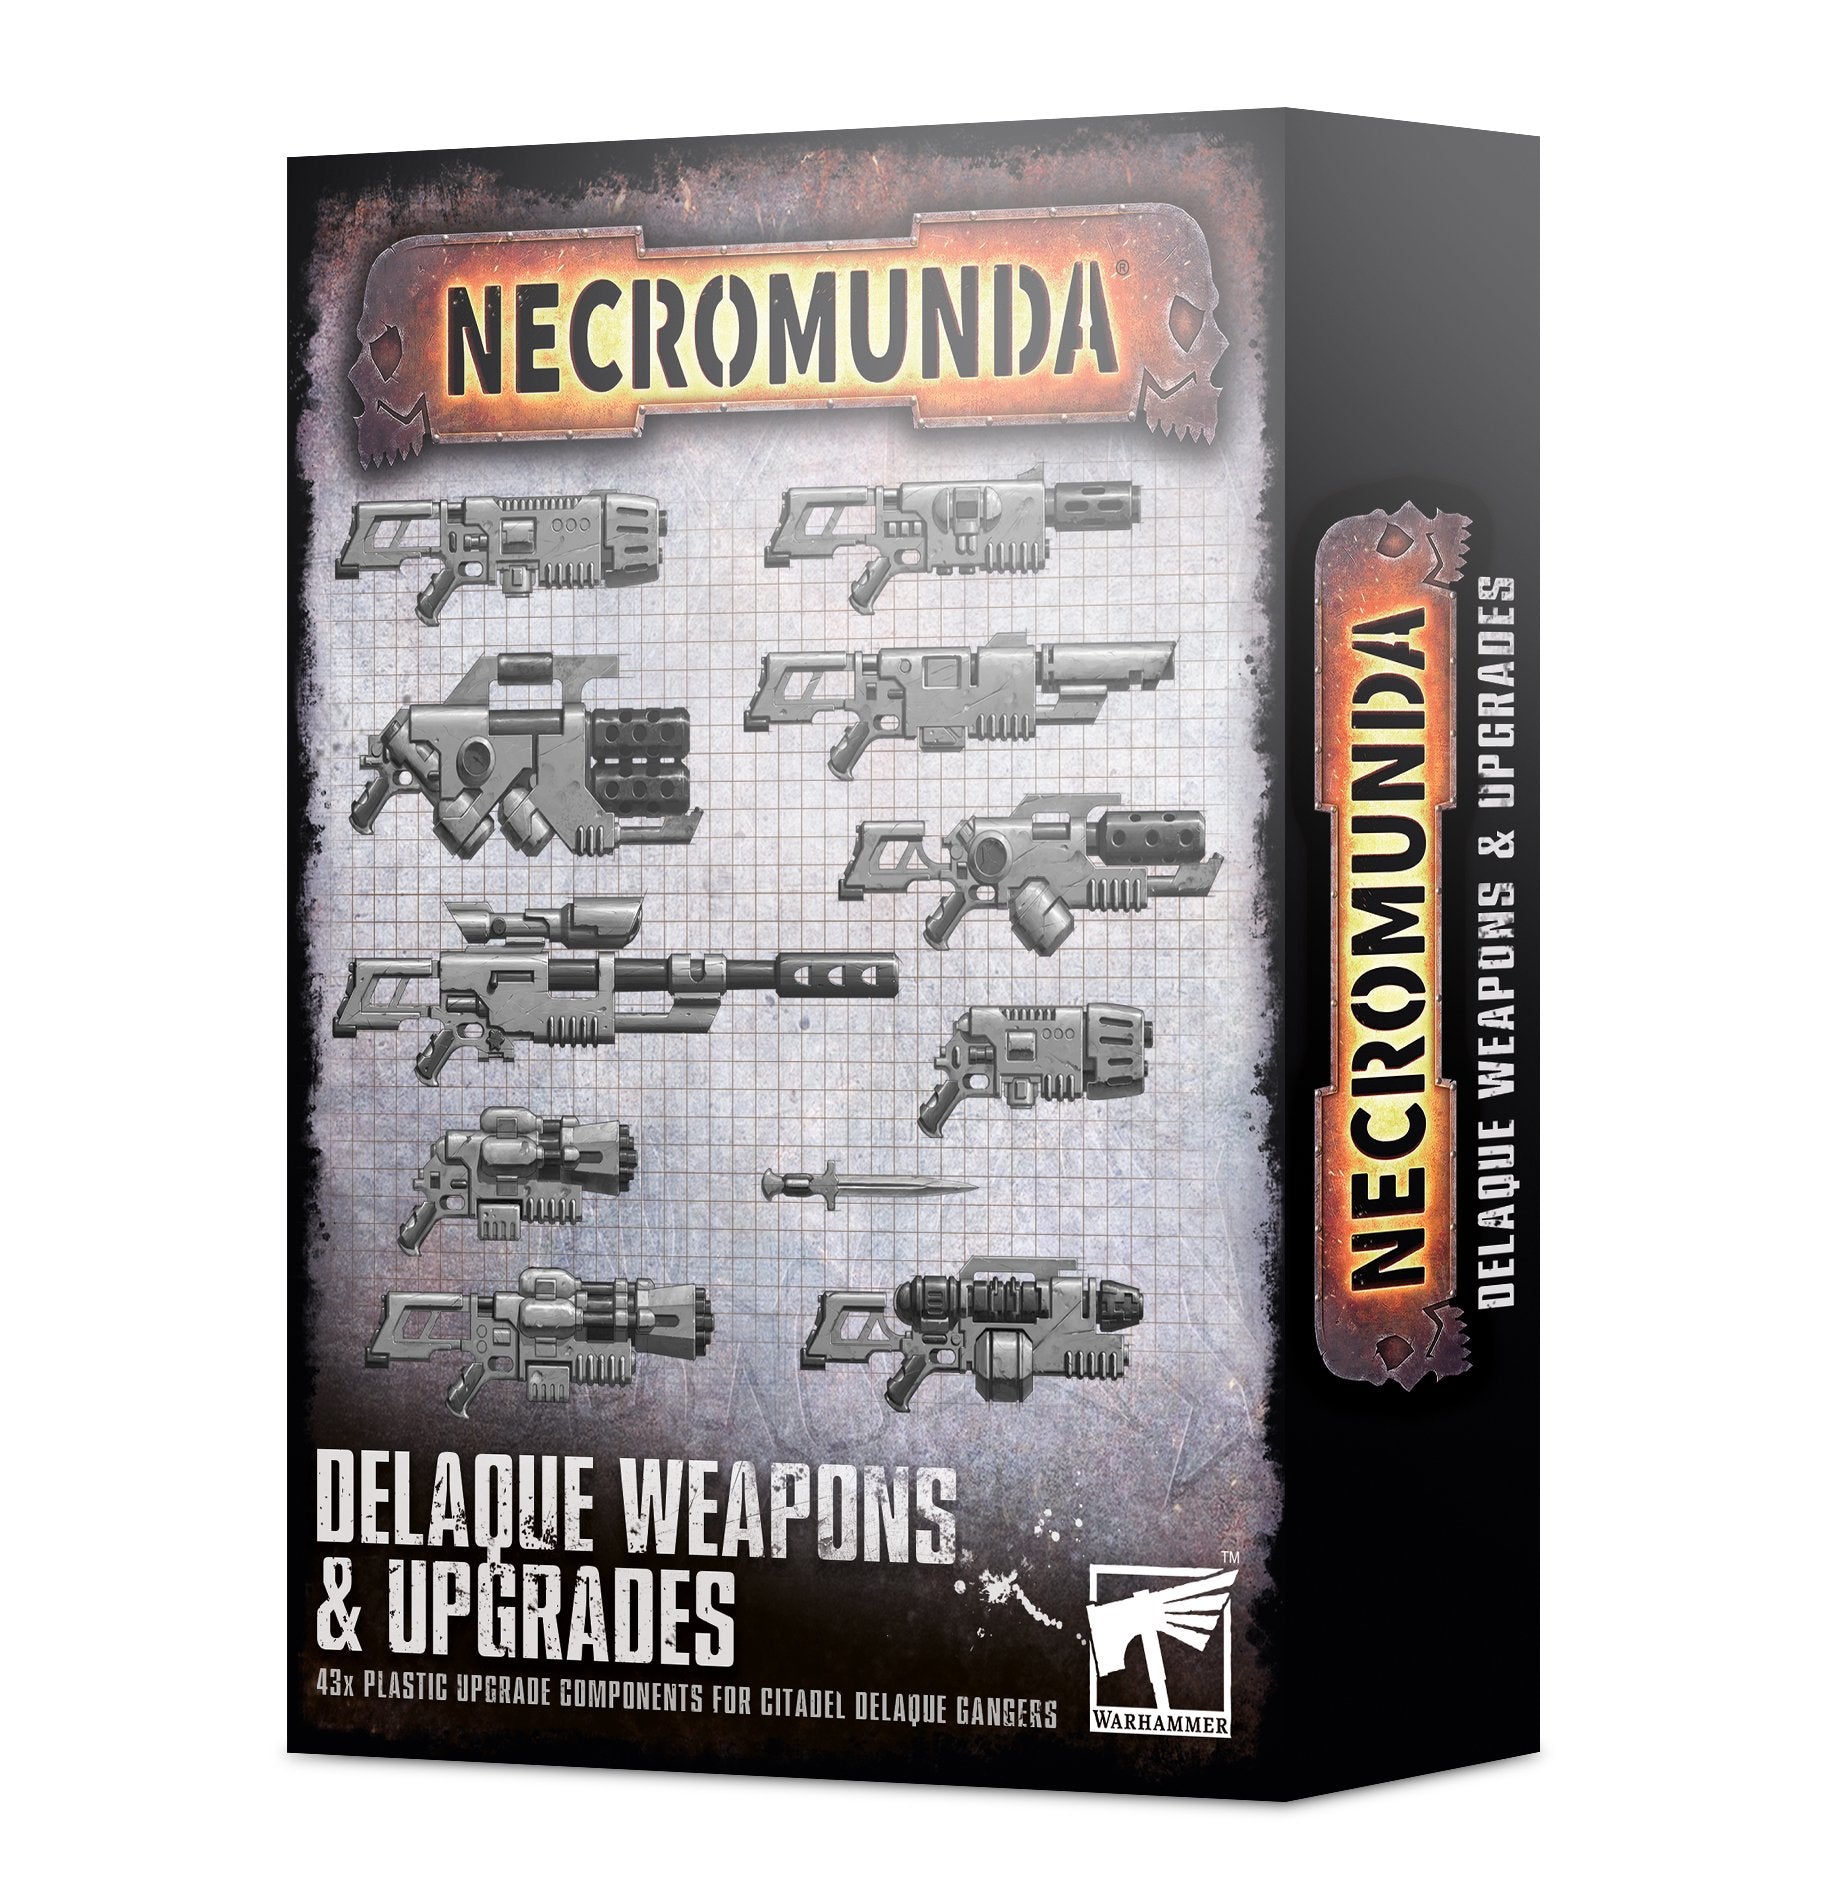 Delaque weapons and upgrades-Necromunda